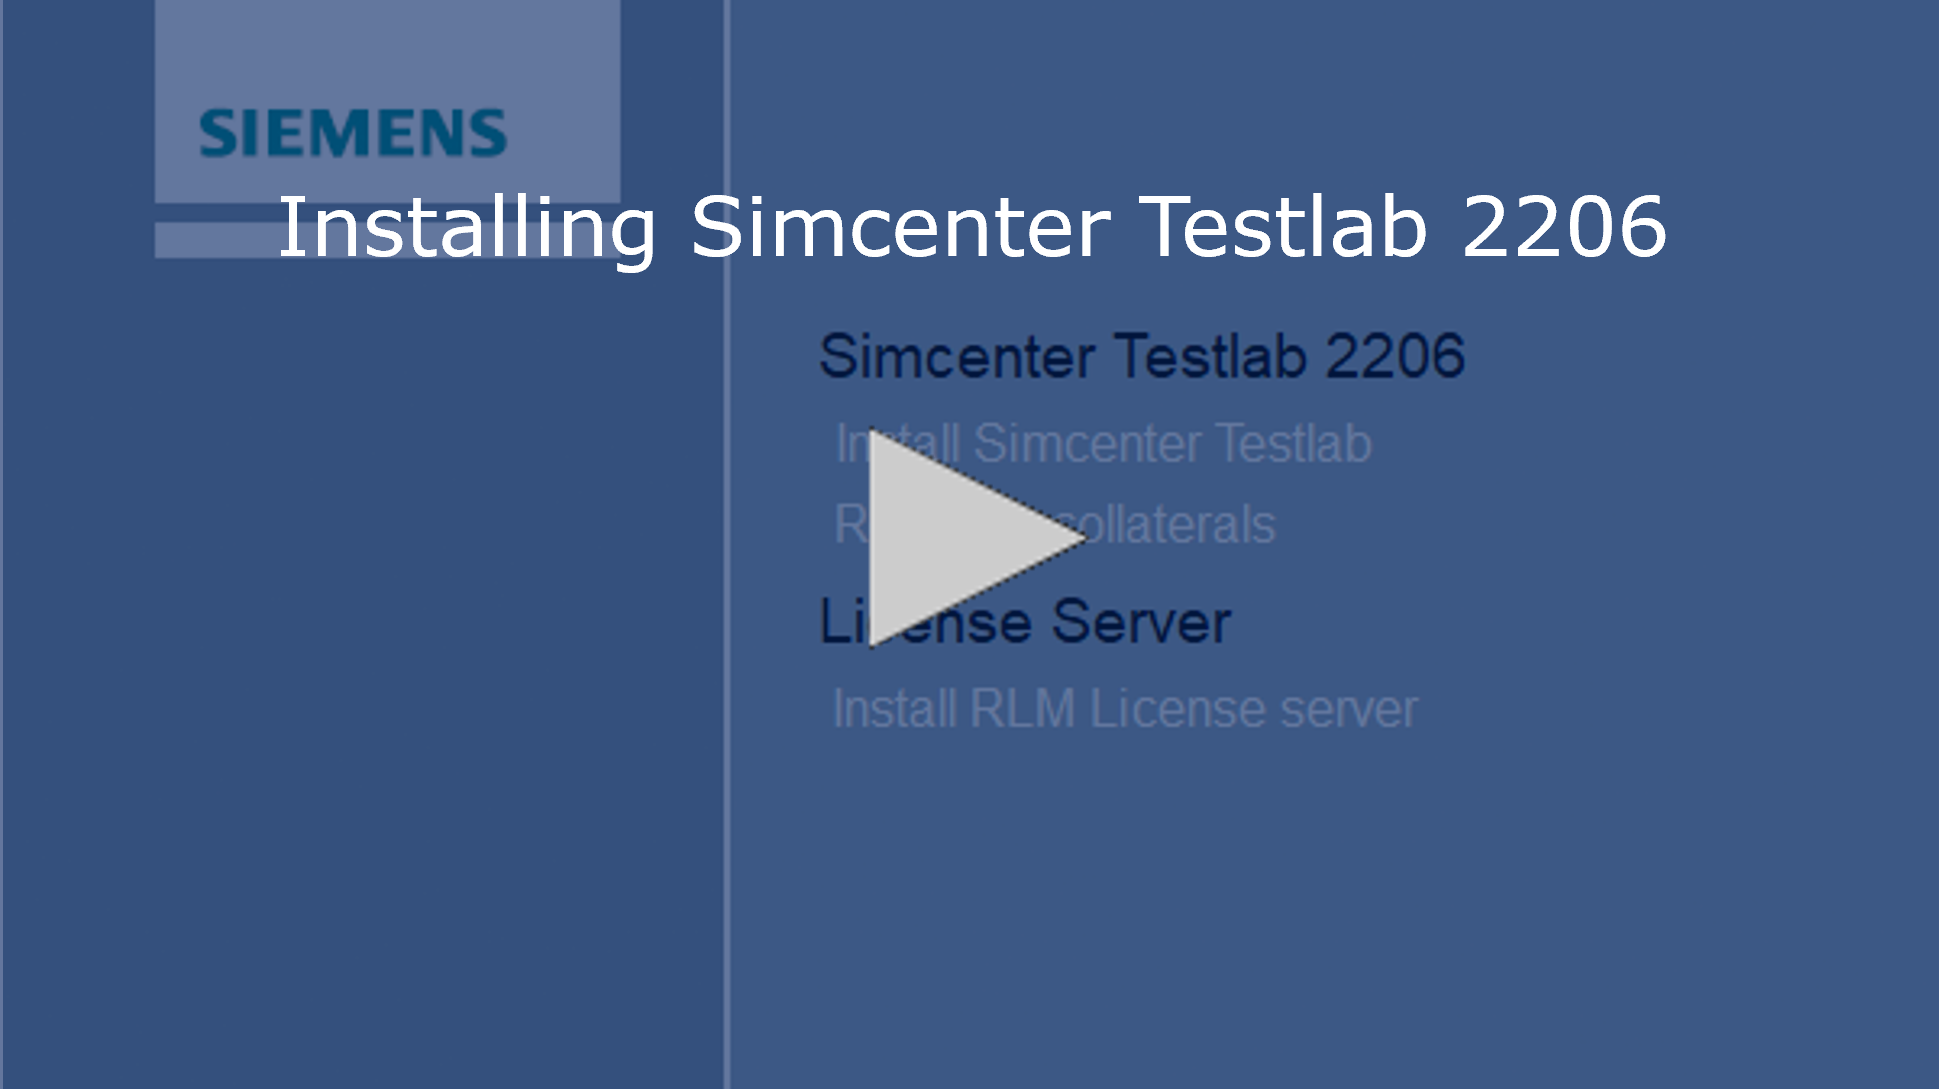 Image link to the video walkthrough for installing Simcenter Testlab 2206.0002